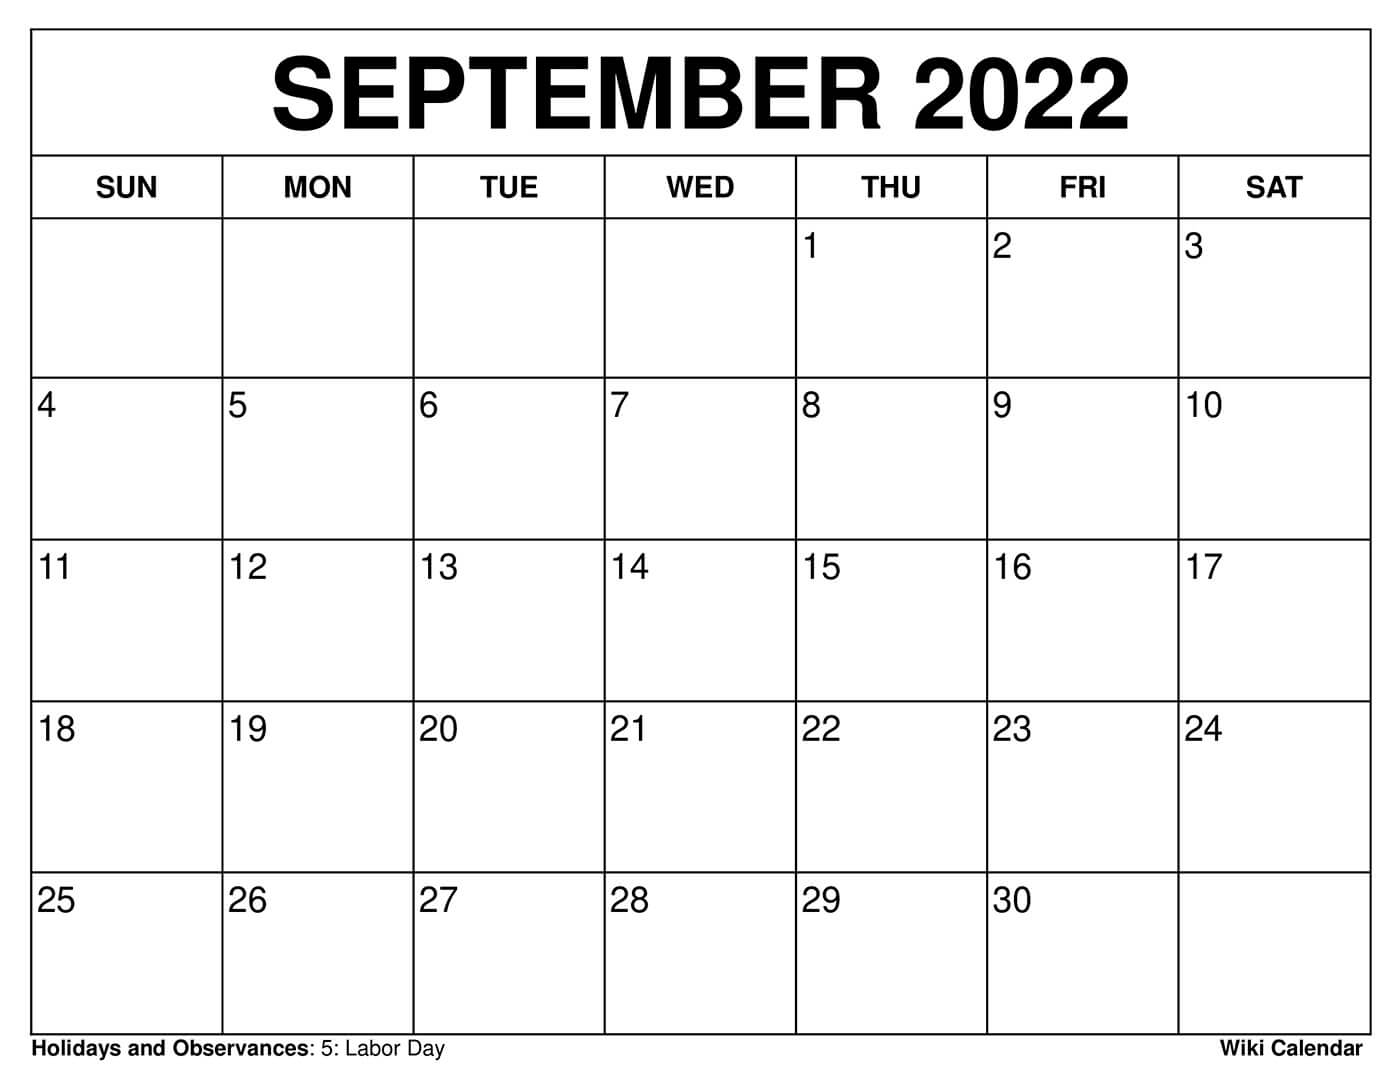 Free September 2022 Printable Calendar Free Printable September 2022 Calendars - Wiki Calendar